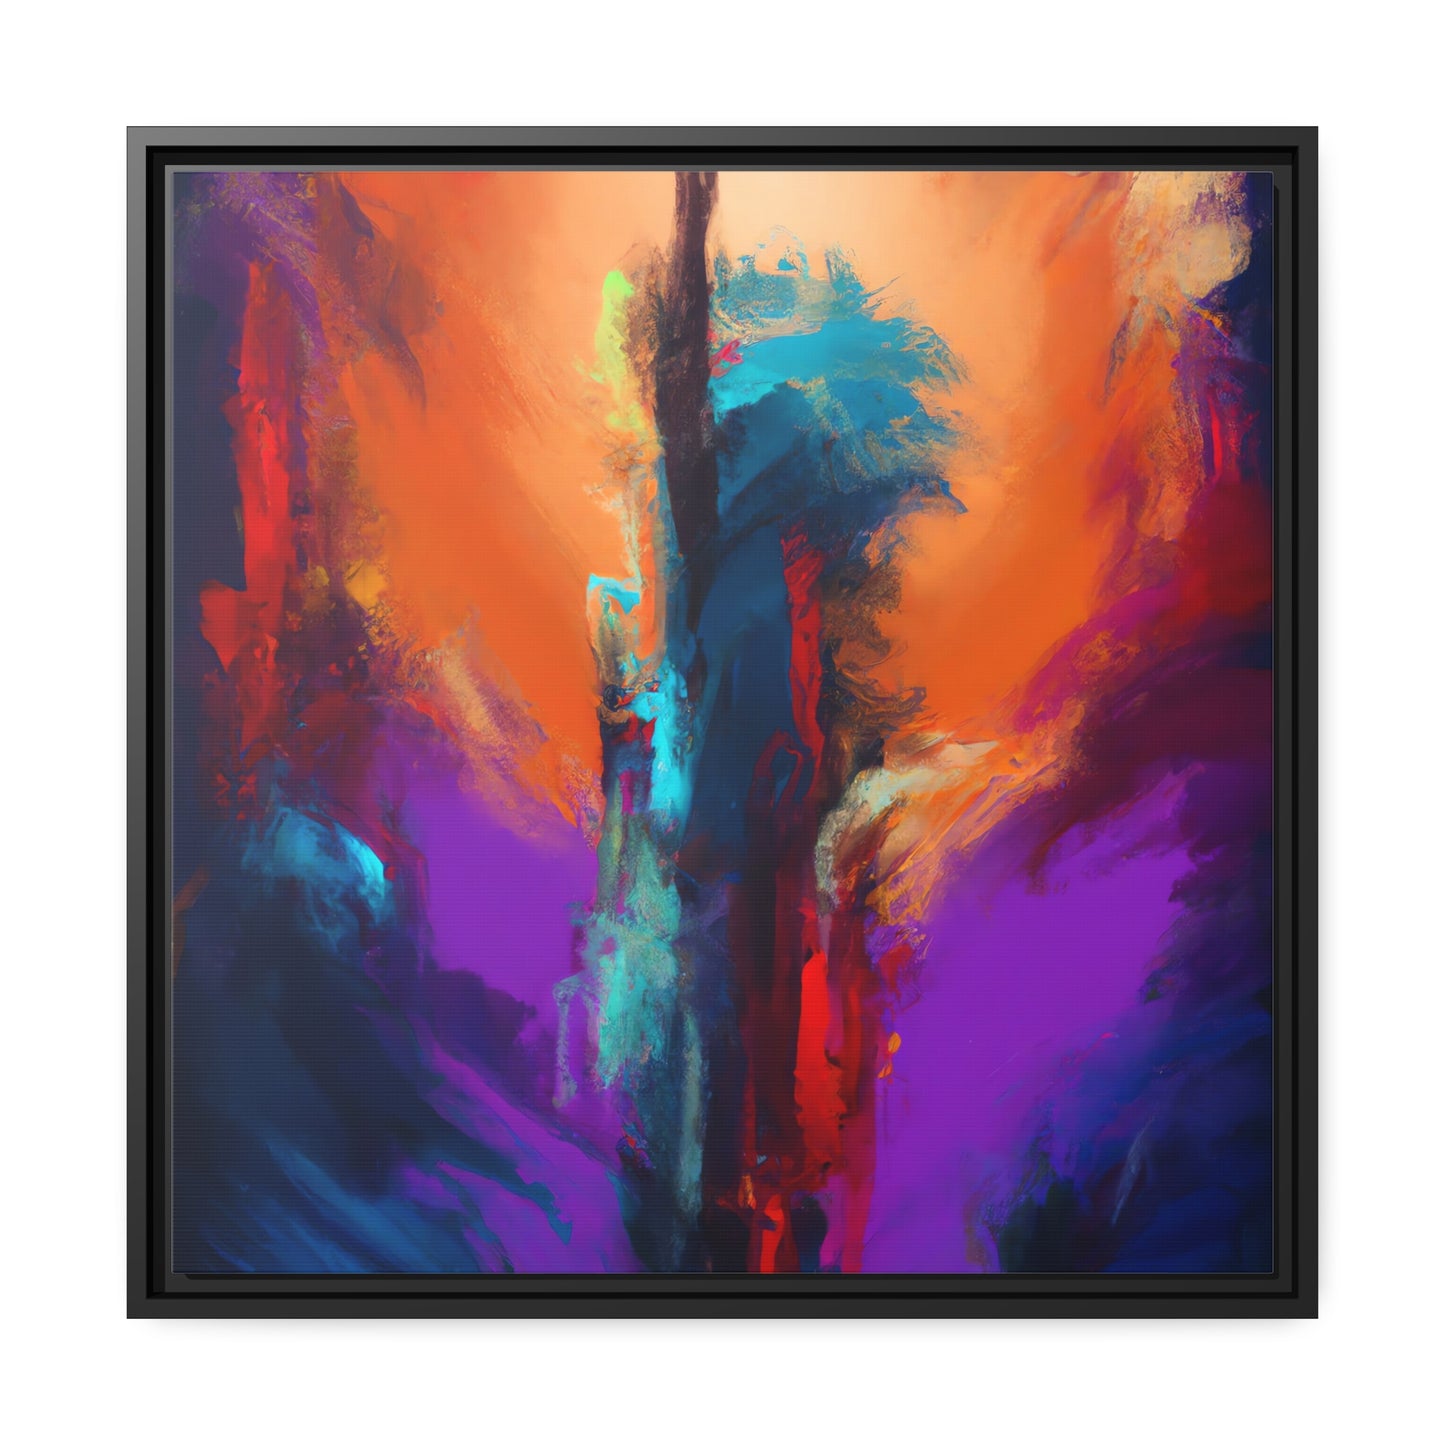 Iris Proctor - Framed Canvas